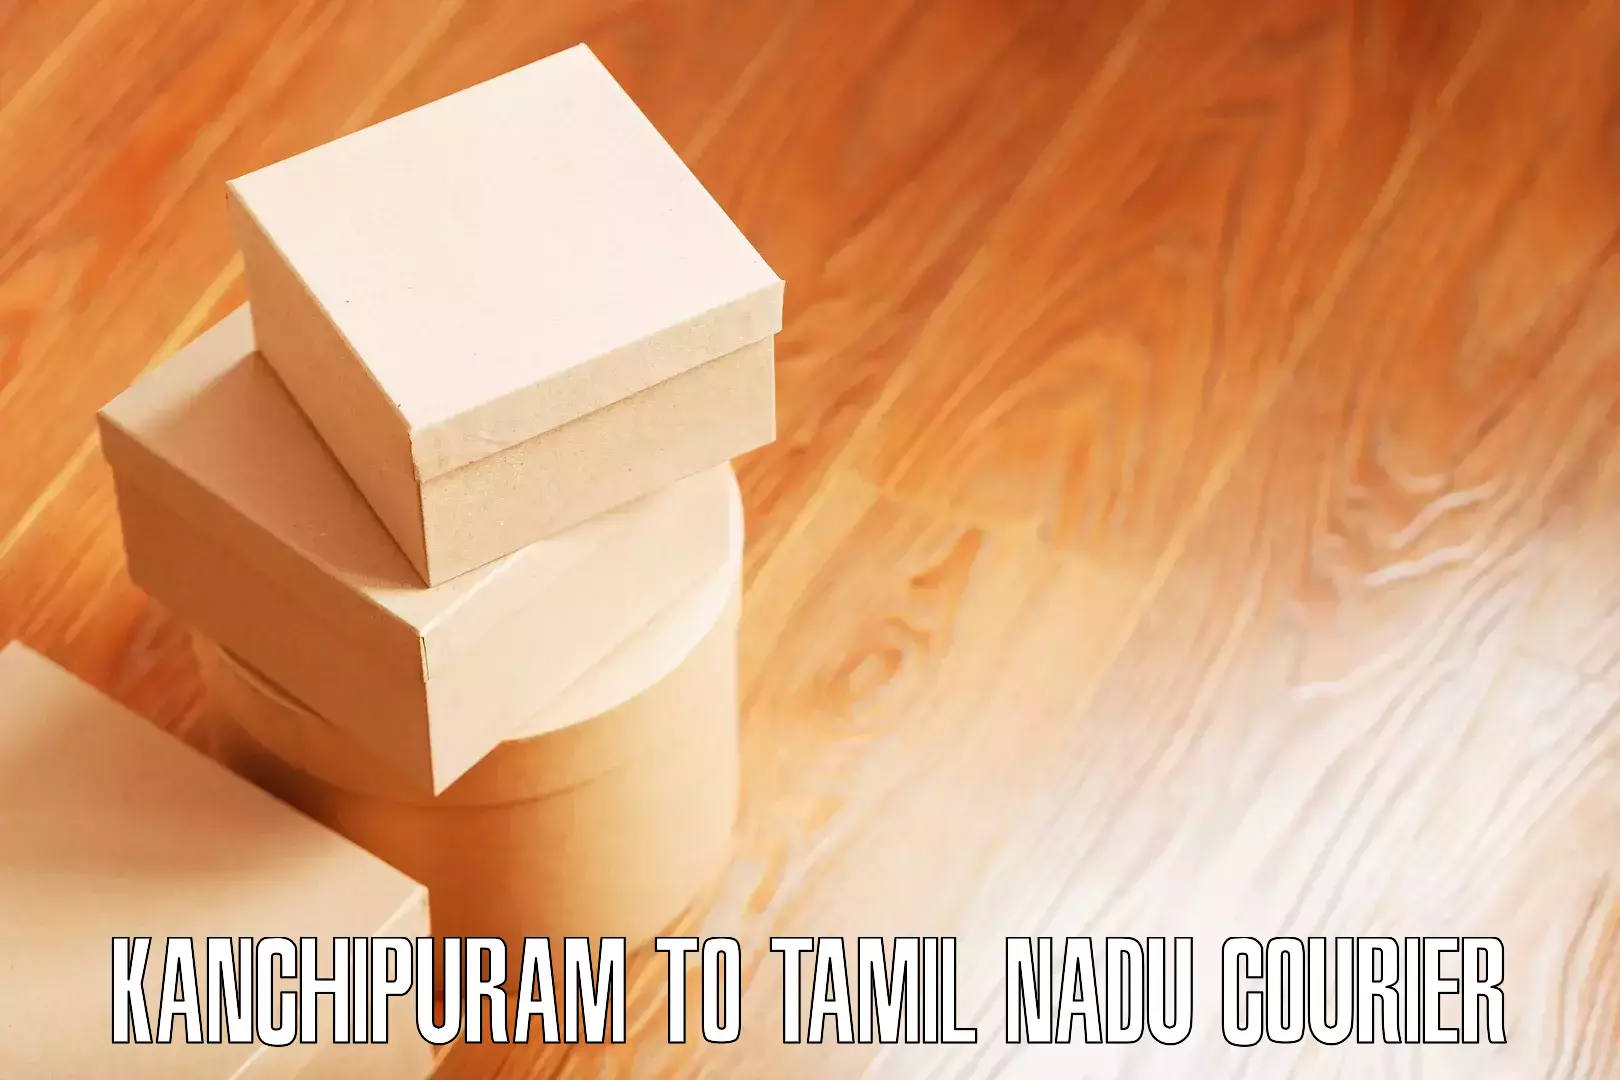 Hassle-free relocation in Kanchipuram to Tamil Nadu